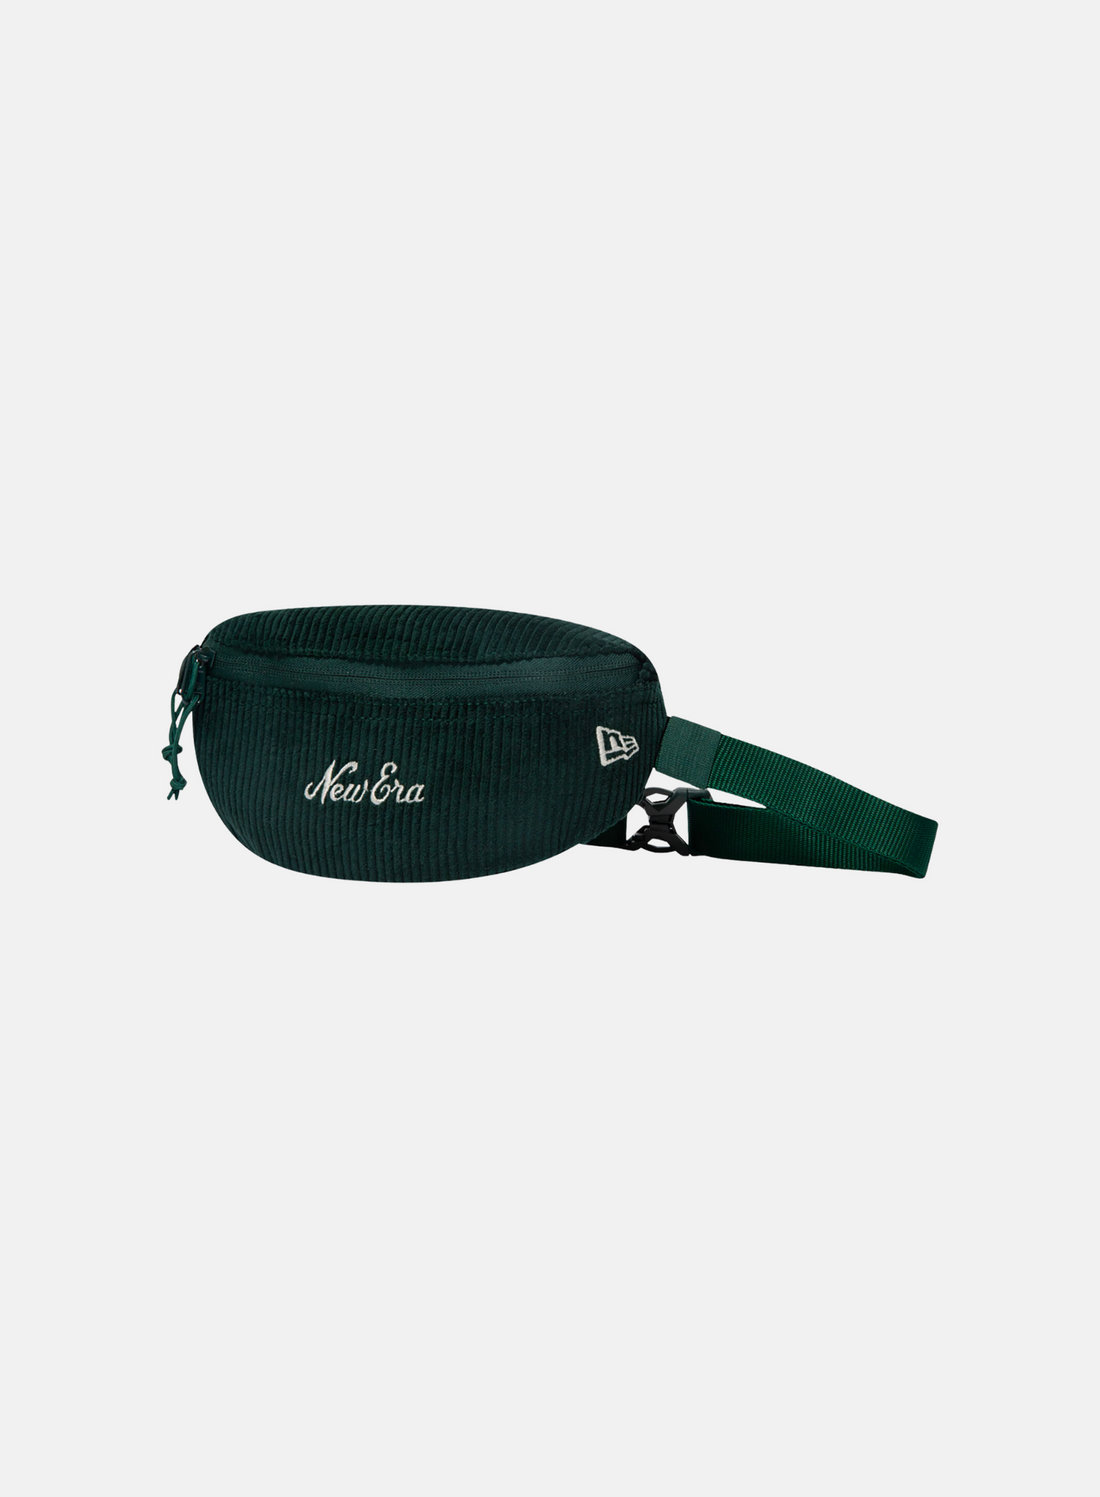 New Era Cord Green Mini Waist Bag - Hympala Store 